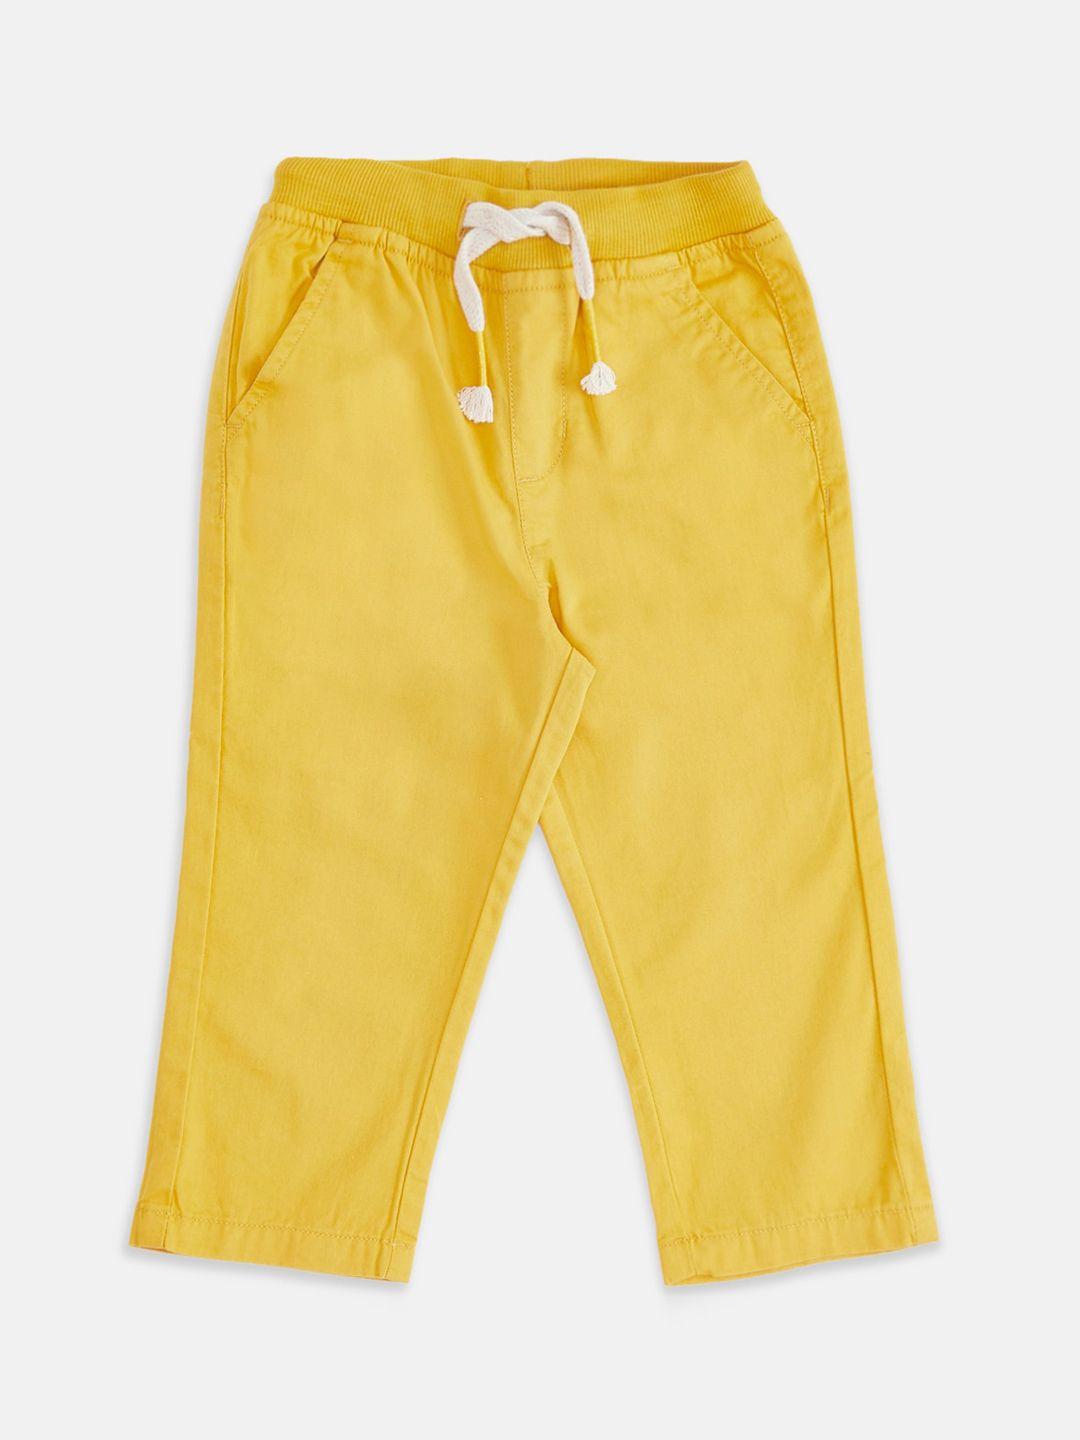 pantaloons-baby-boys-yellow-cotton-trousers